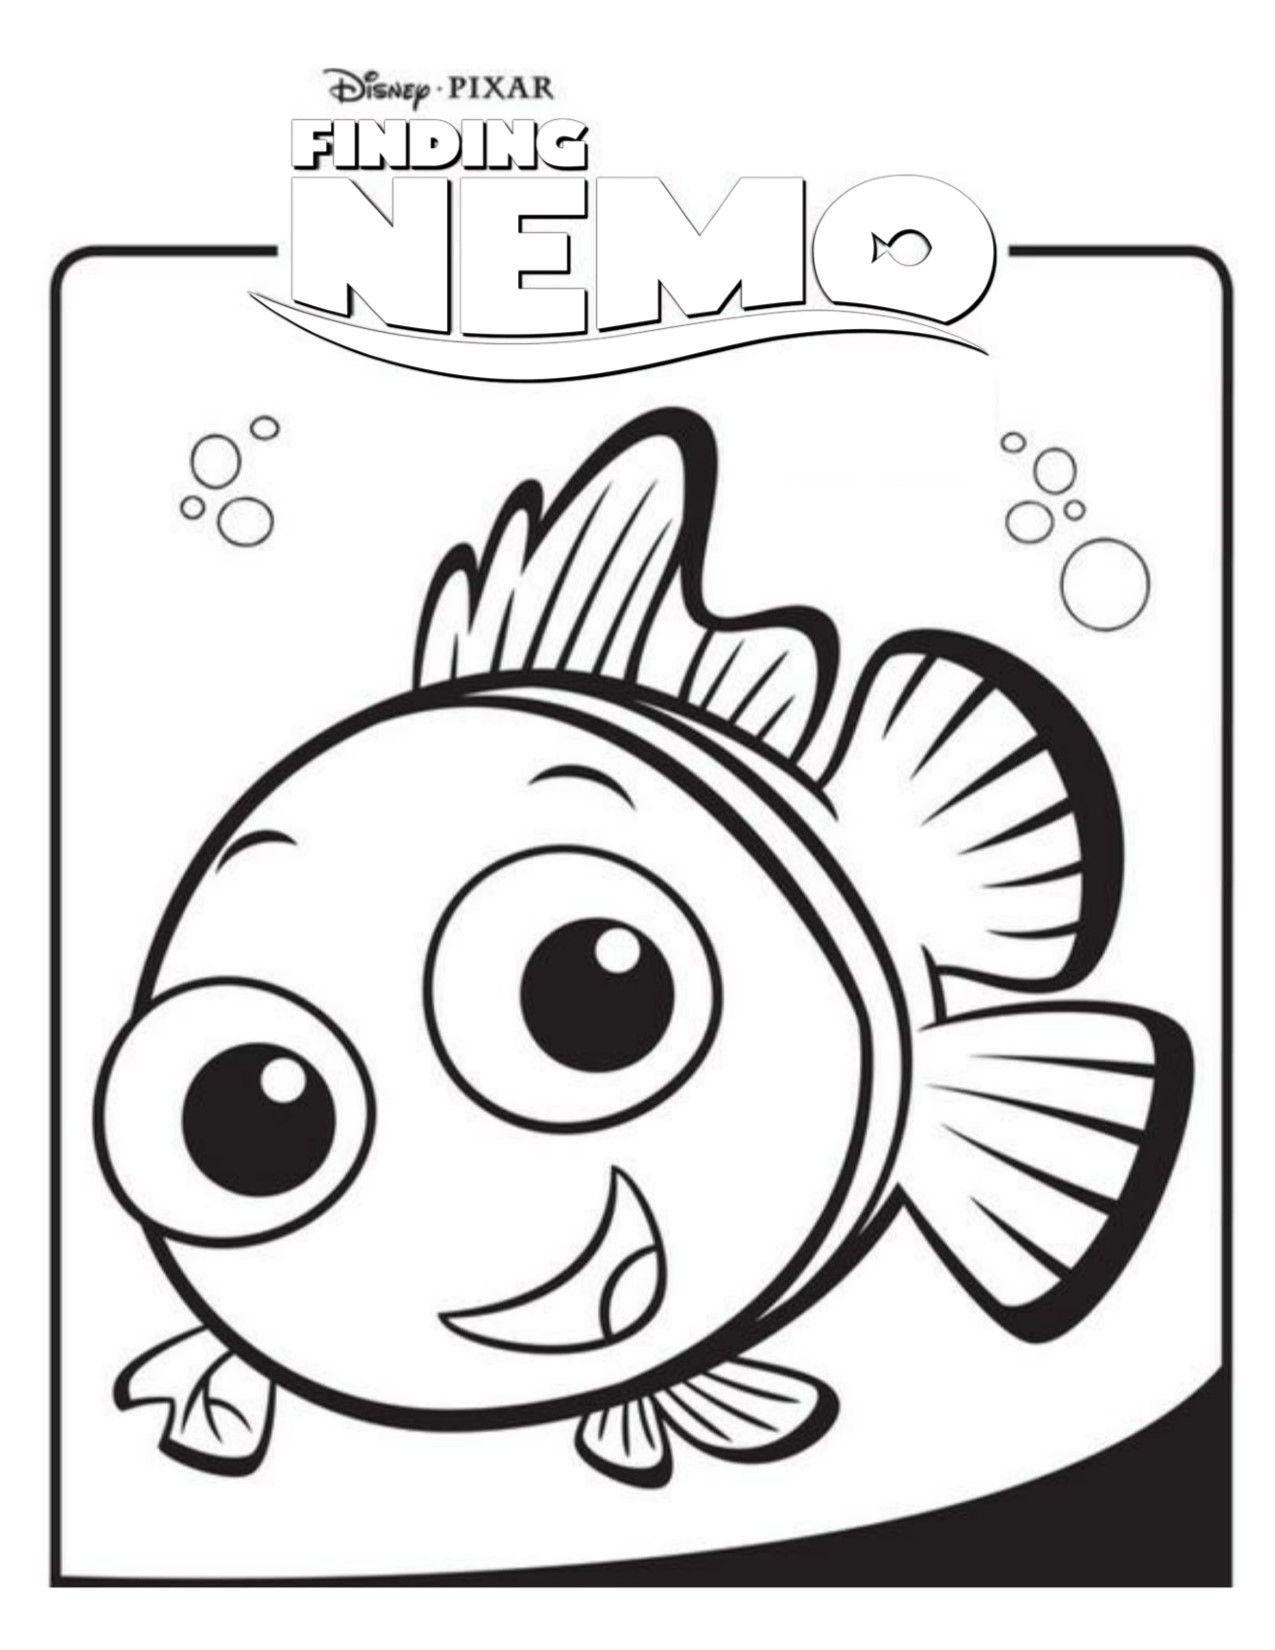 Finding Nemo Black and White Logo - Finding Nemo: White Logo. Disney: Movie Covers